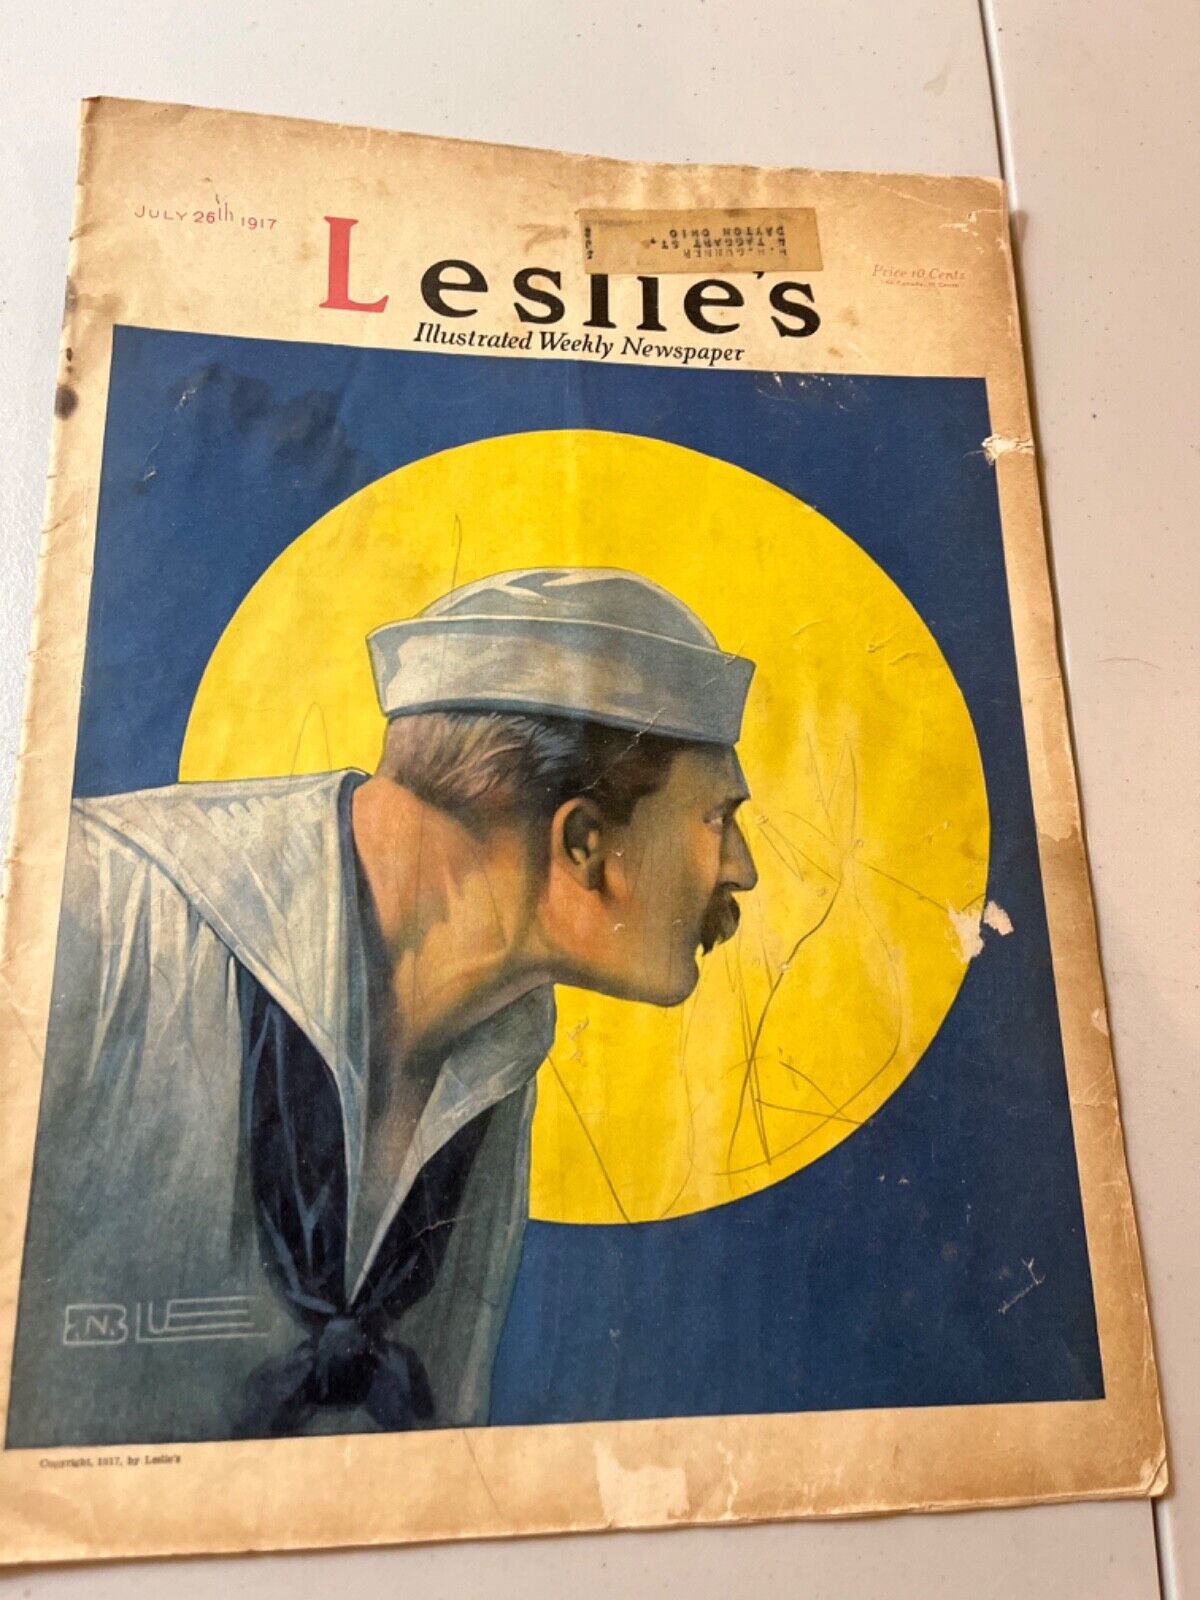 Leslies's Illustrated Weekly Newspaper July 26, 1917